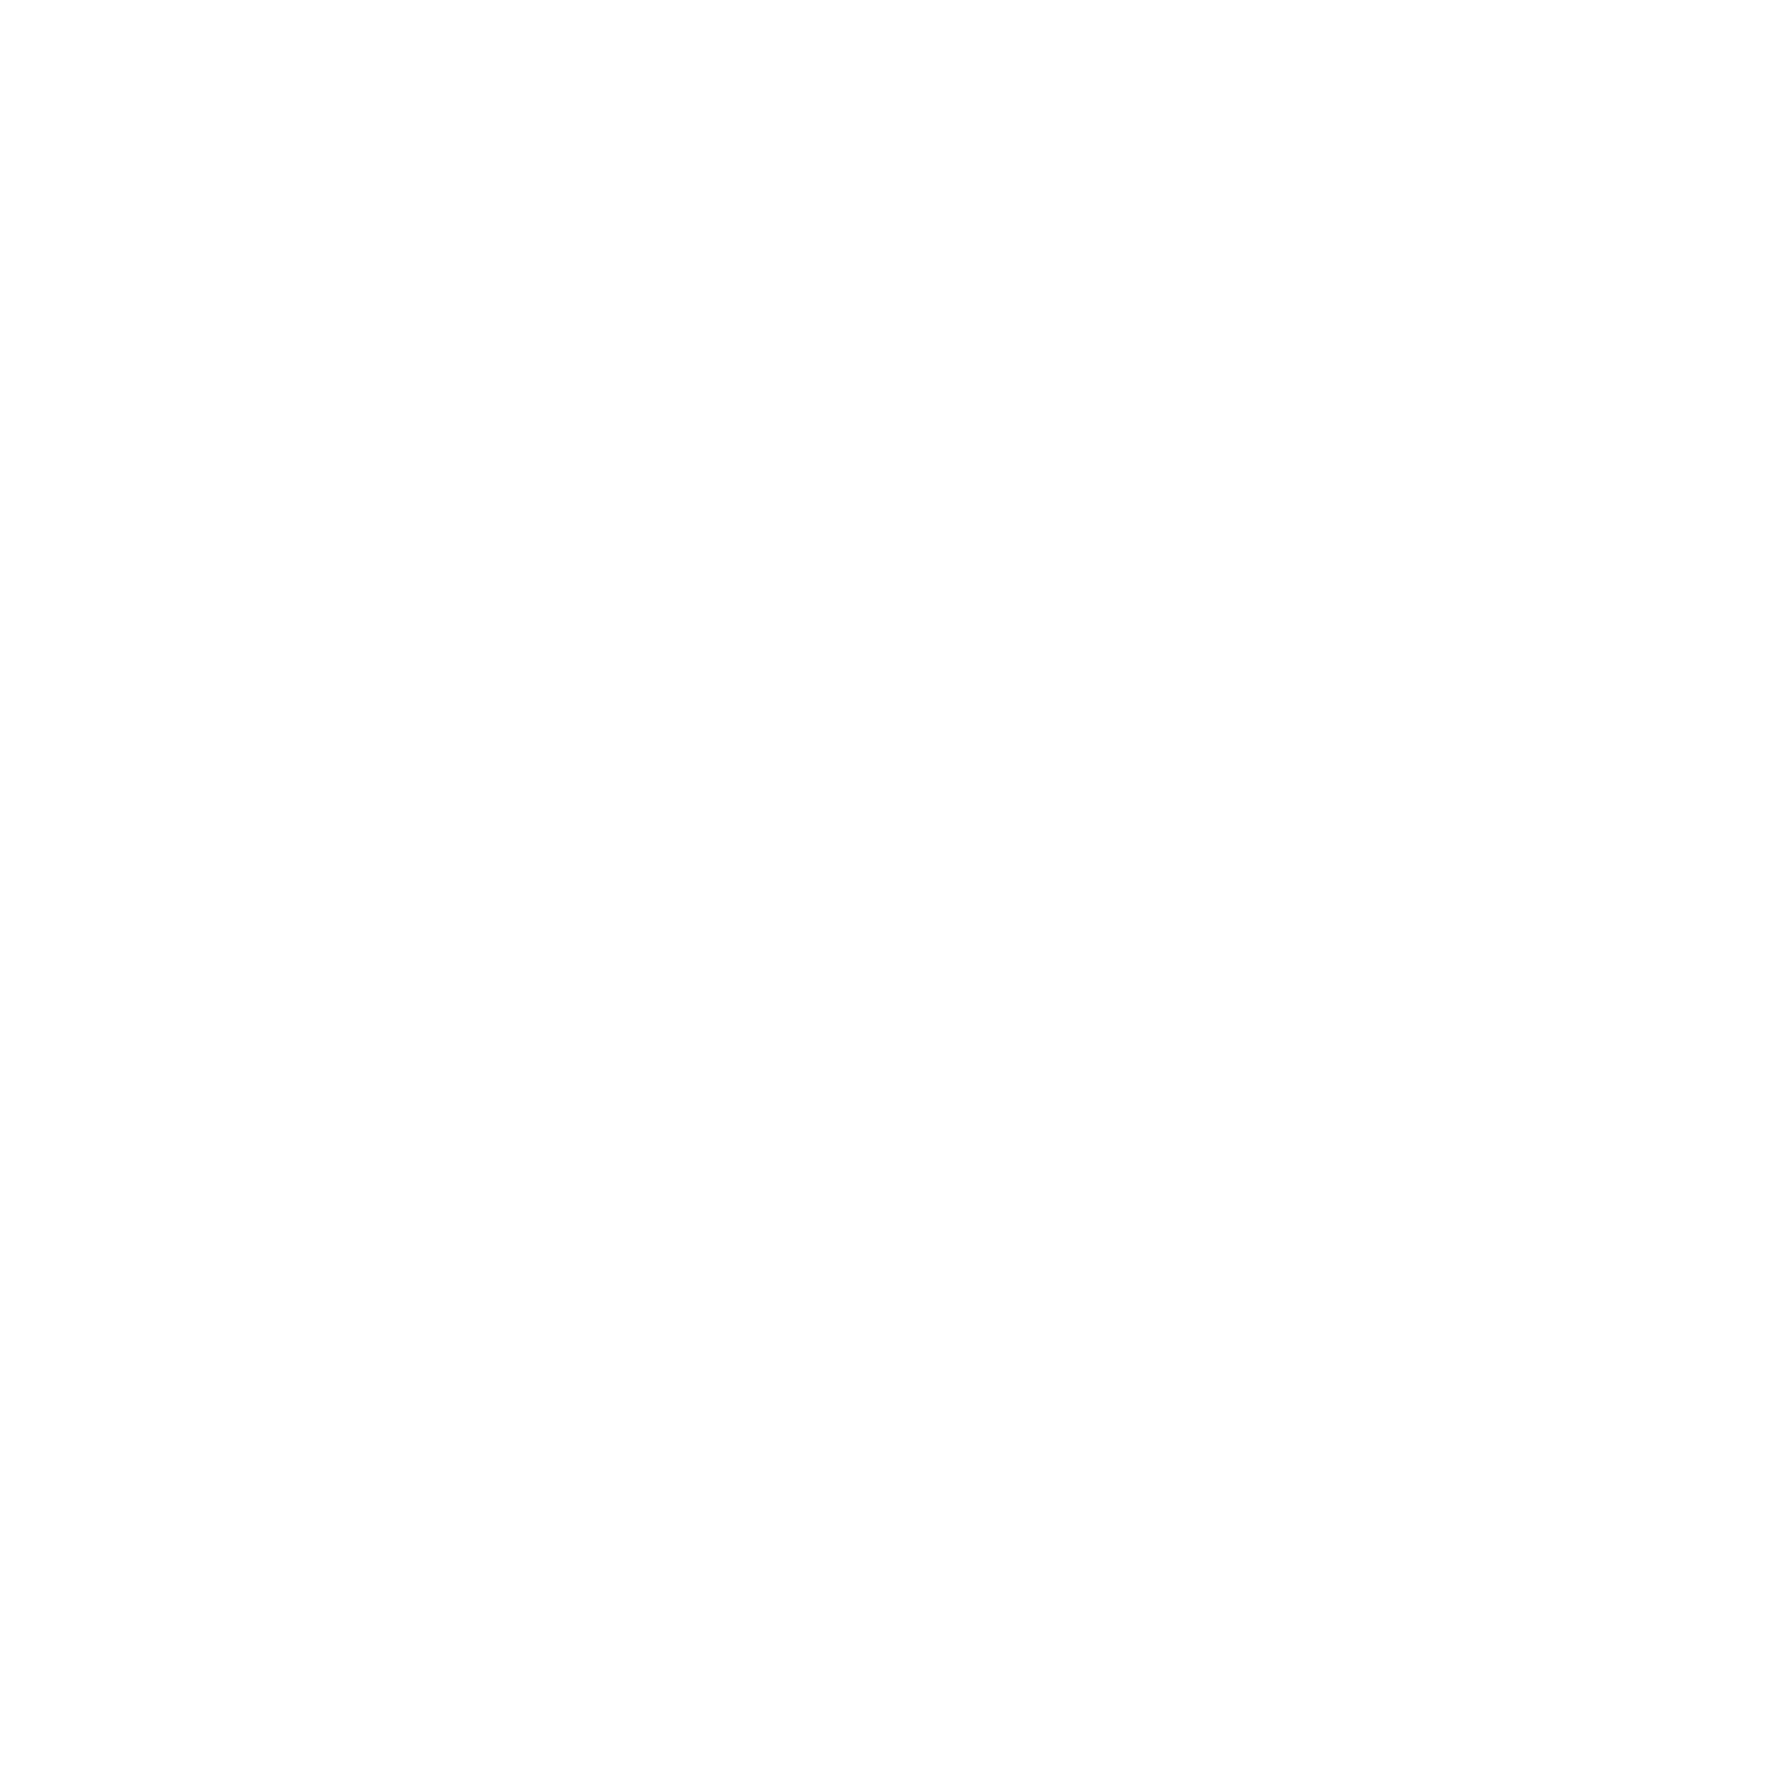 Certified Mark (white)